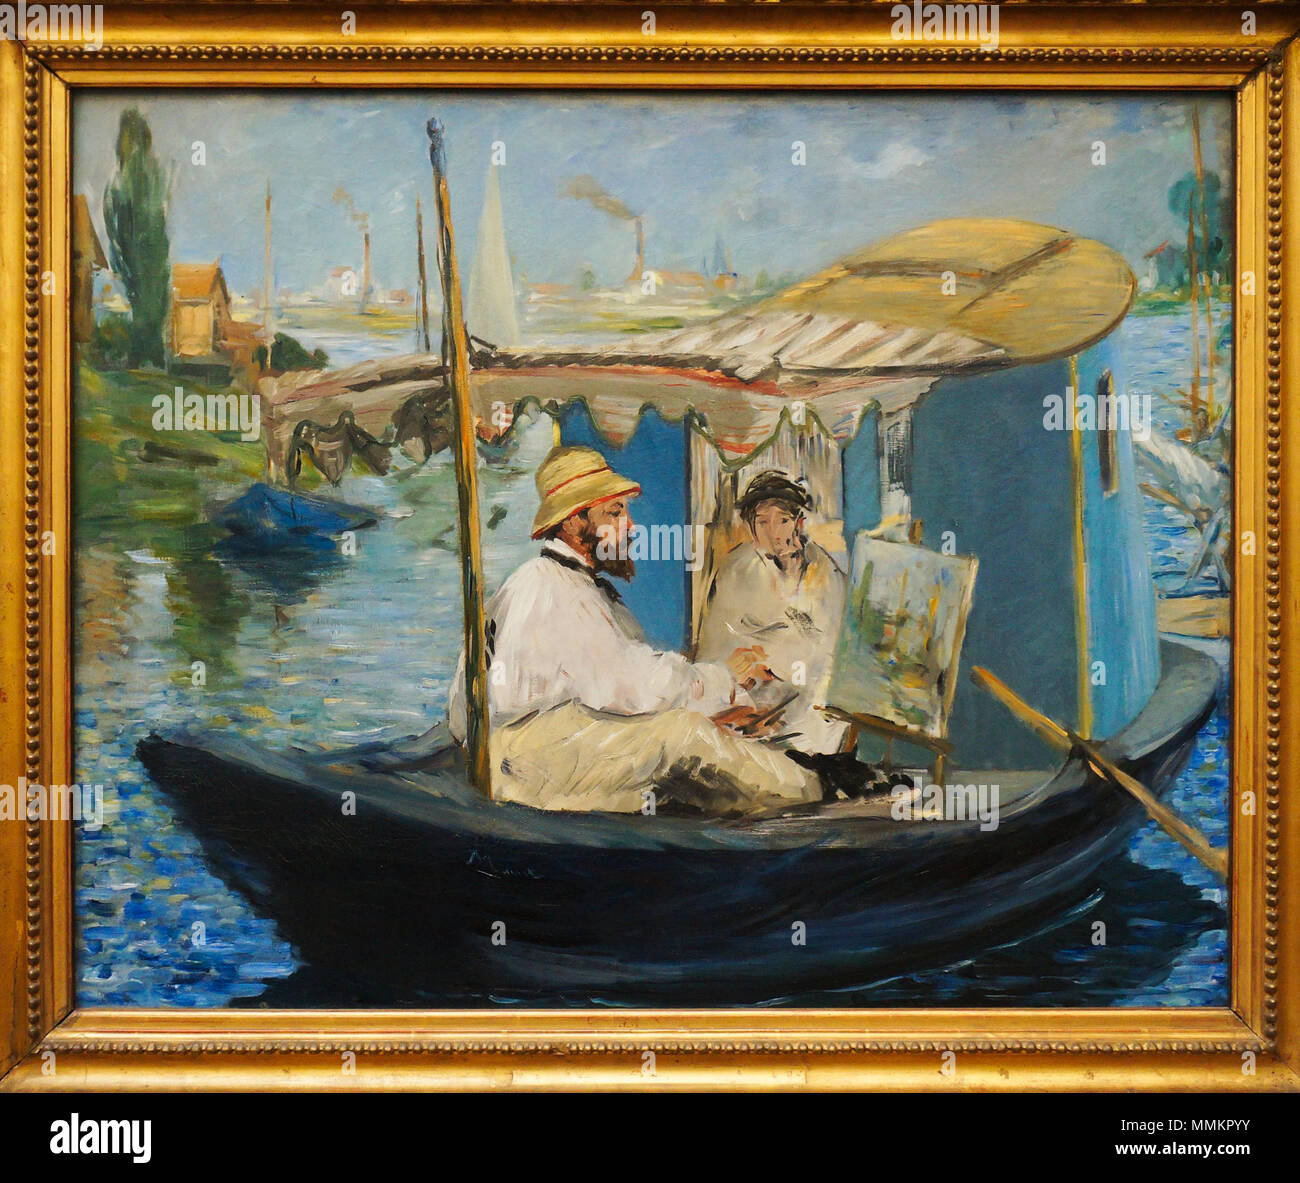 Edouard Manet.- Monet peignant sur son atelier-bâteau Stock Photo